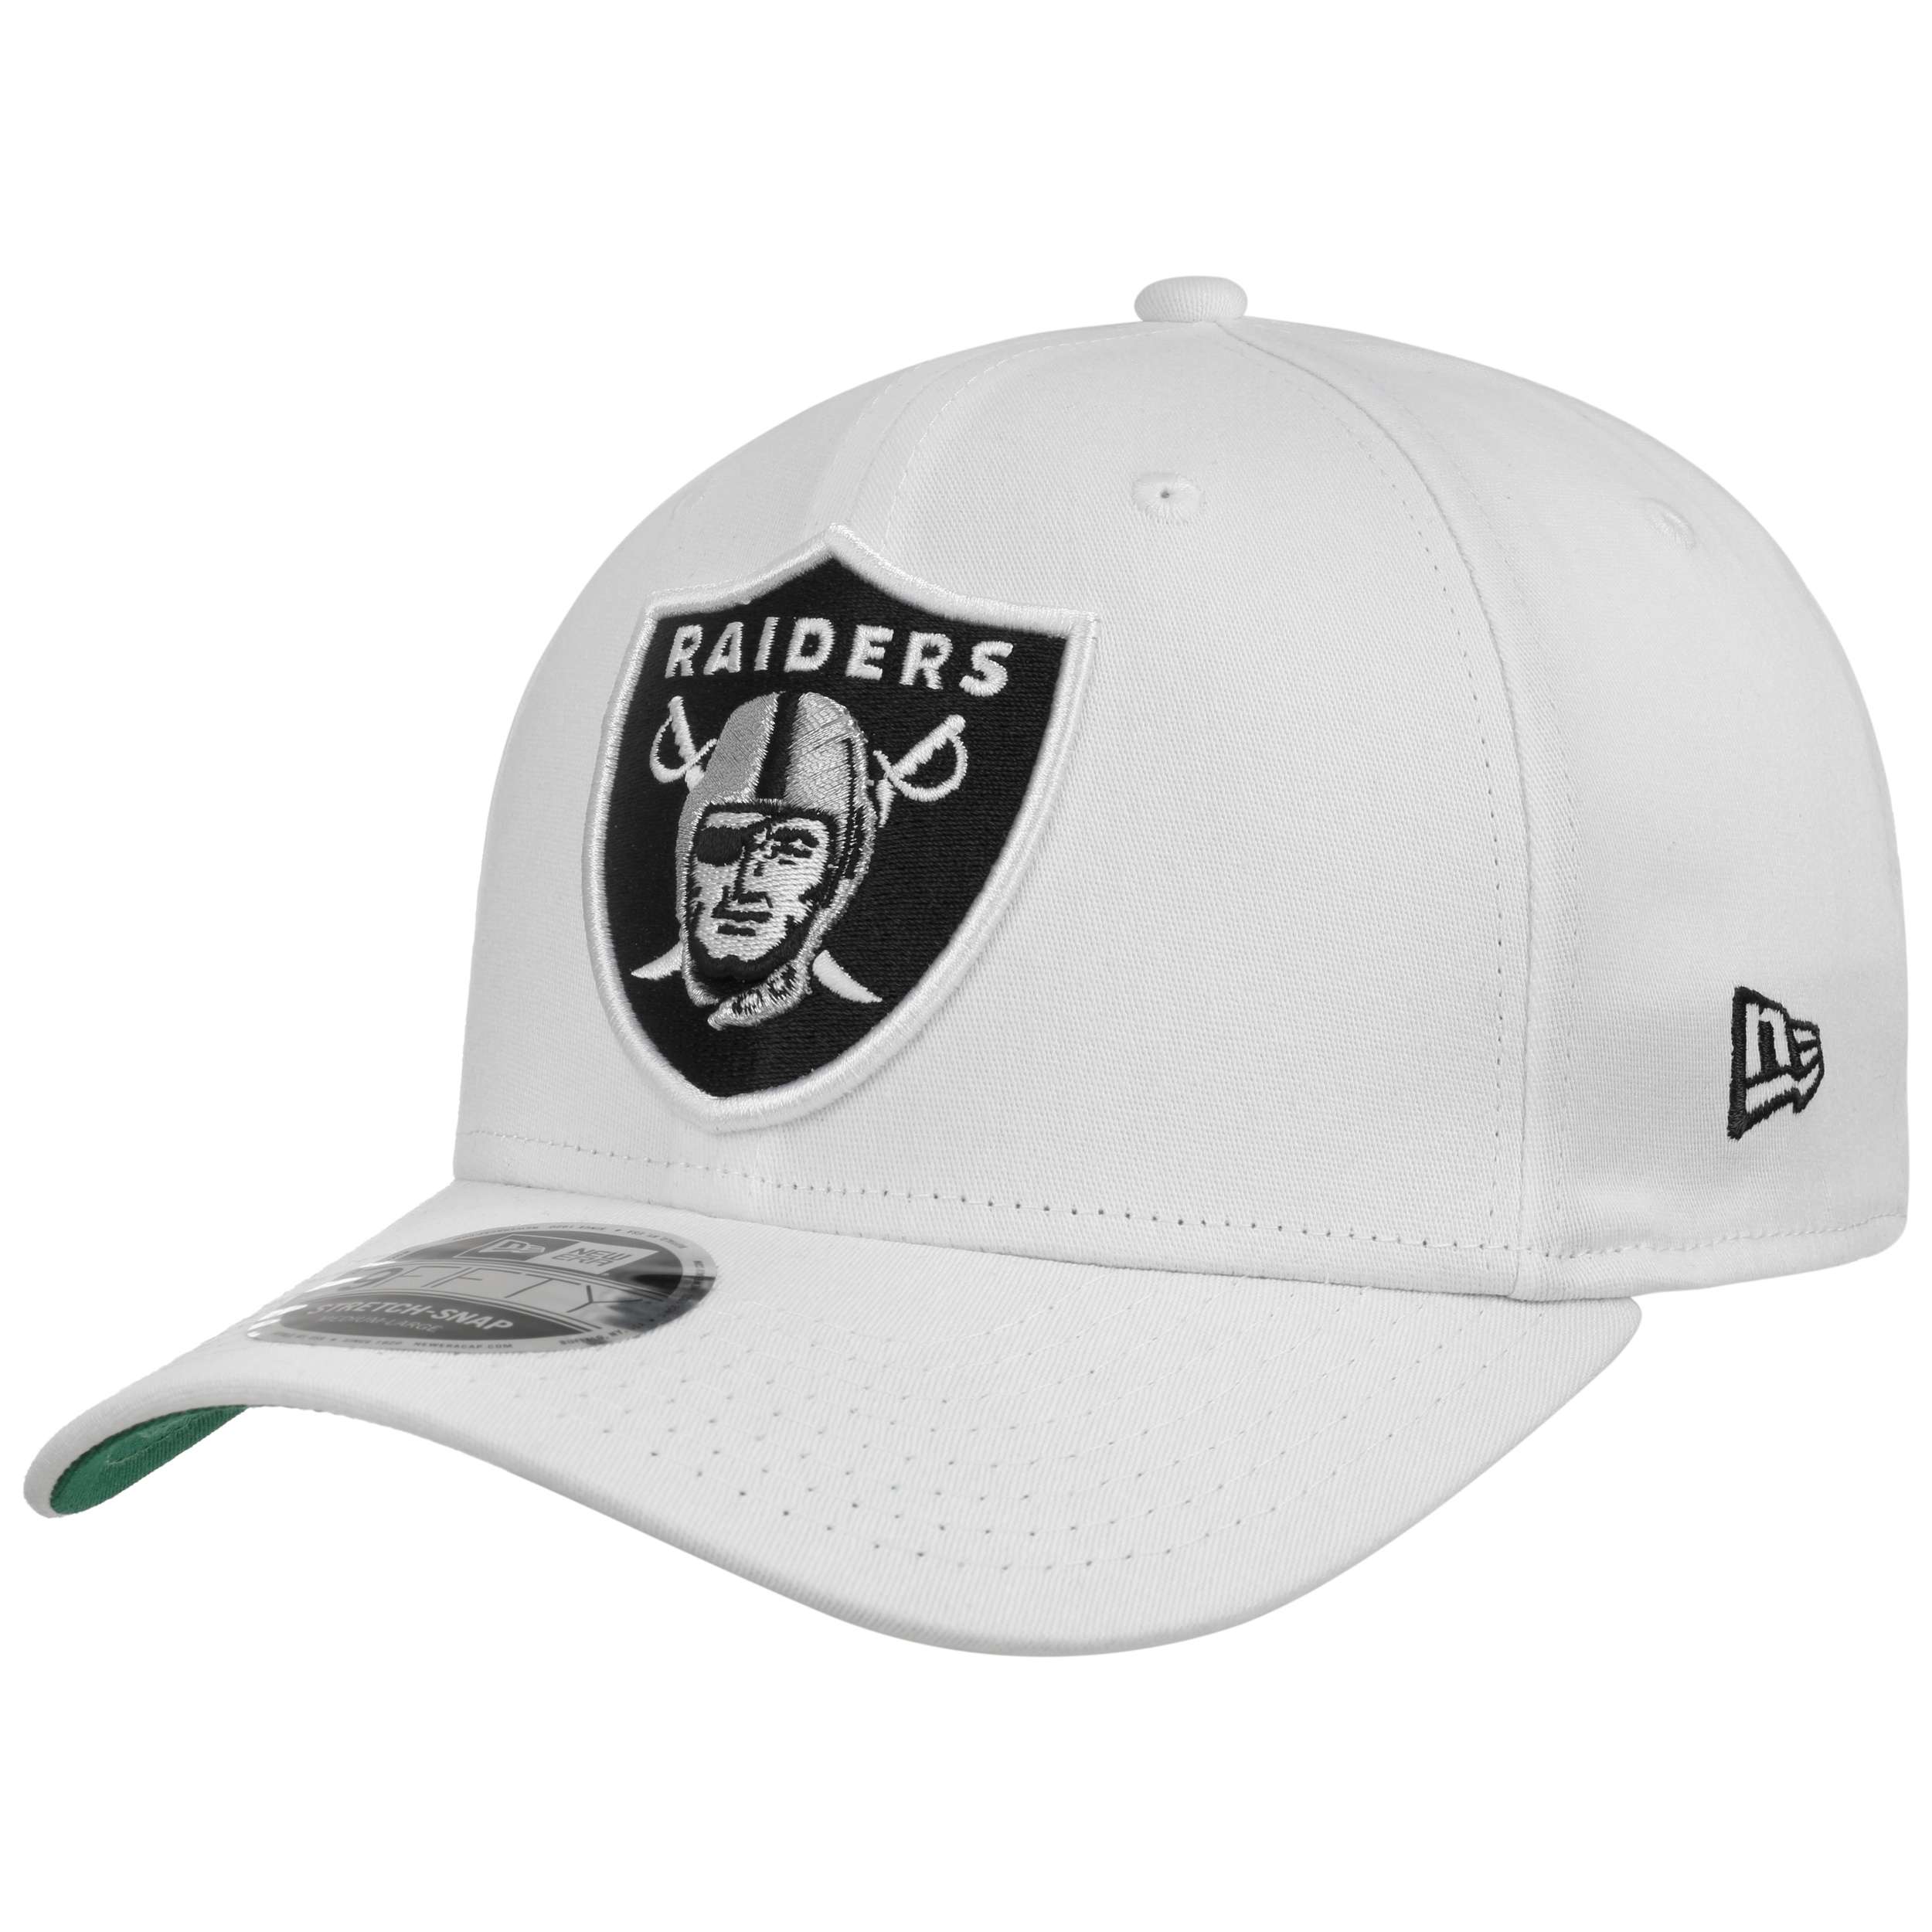 Las Vegas Raiders NFL 9Fifty New Era Hat Snapback Cap Men High